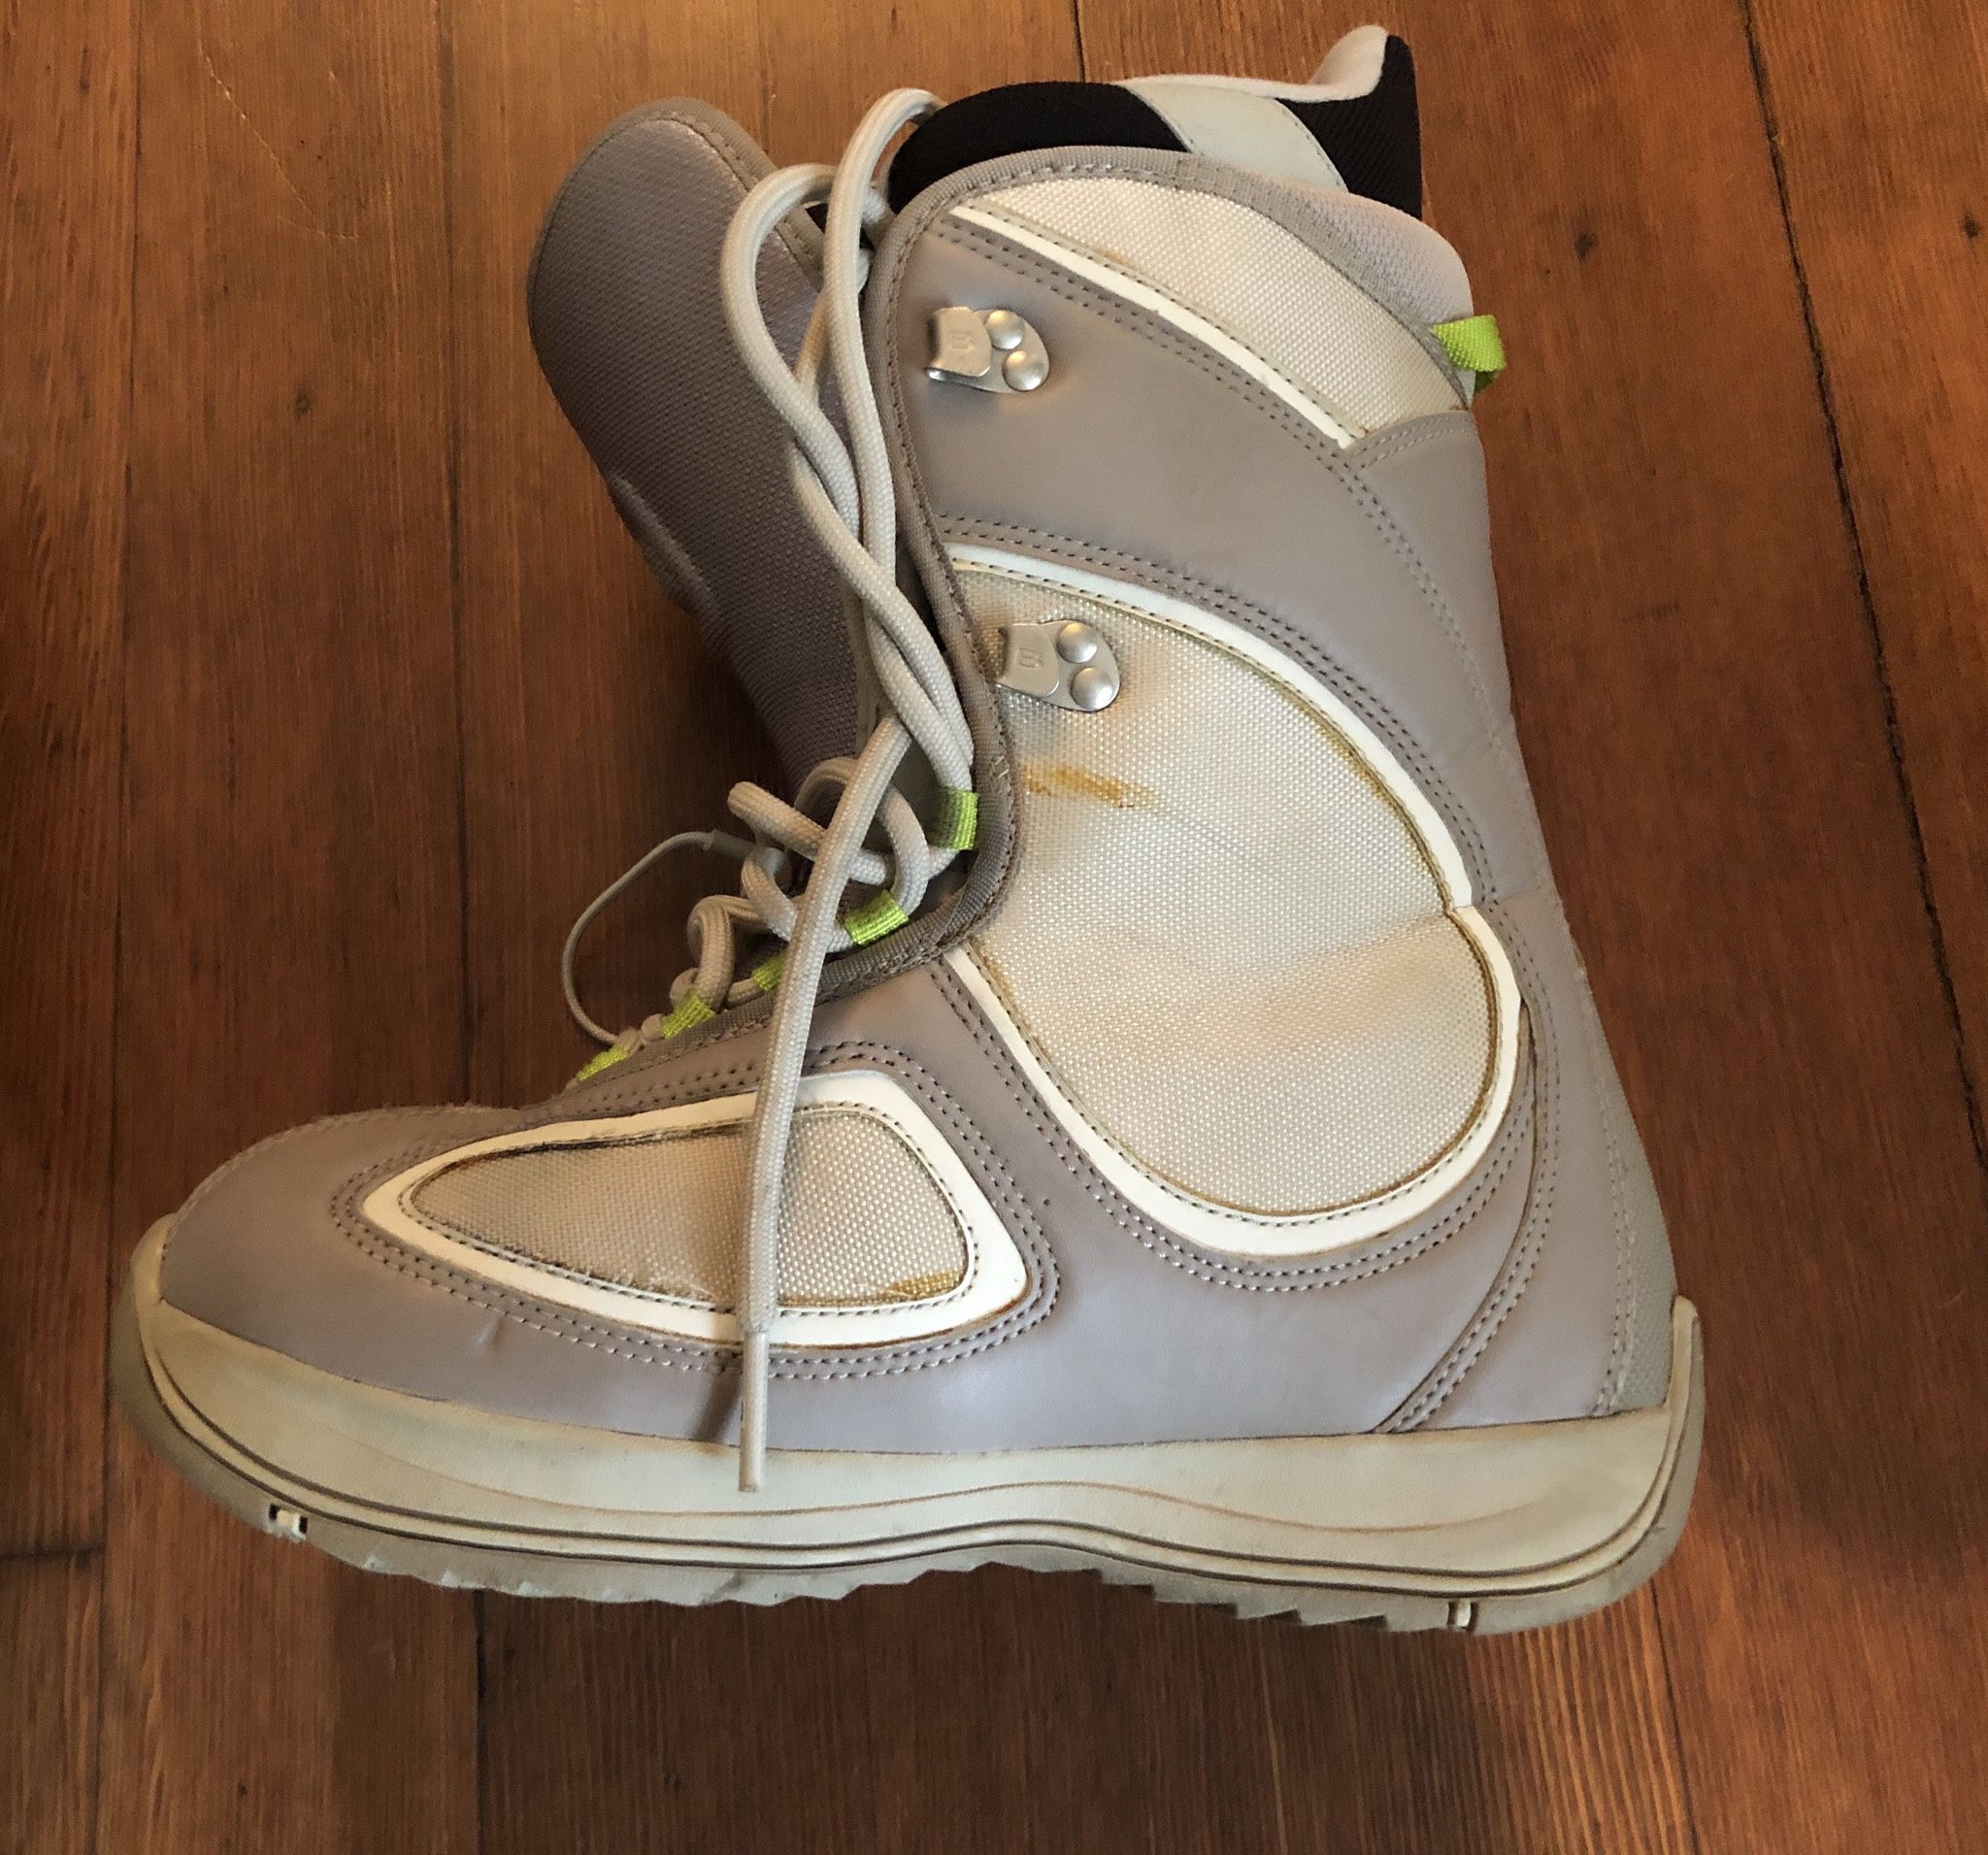 Women's "Breed" Burton Snowboarding Boots - Size 8.5